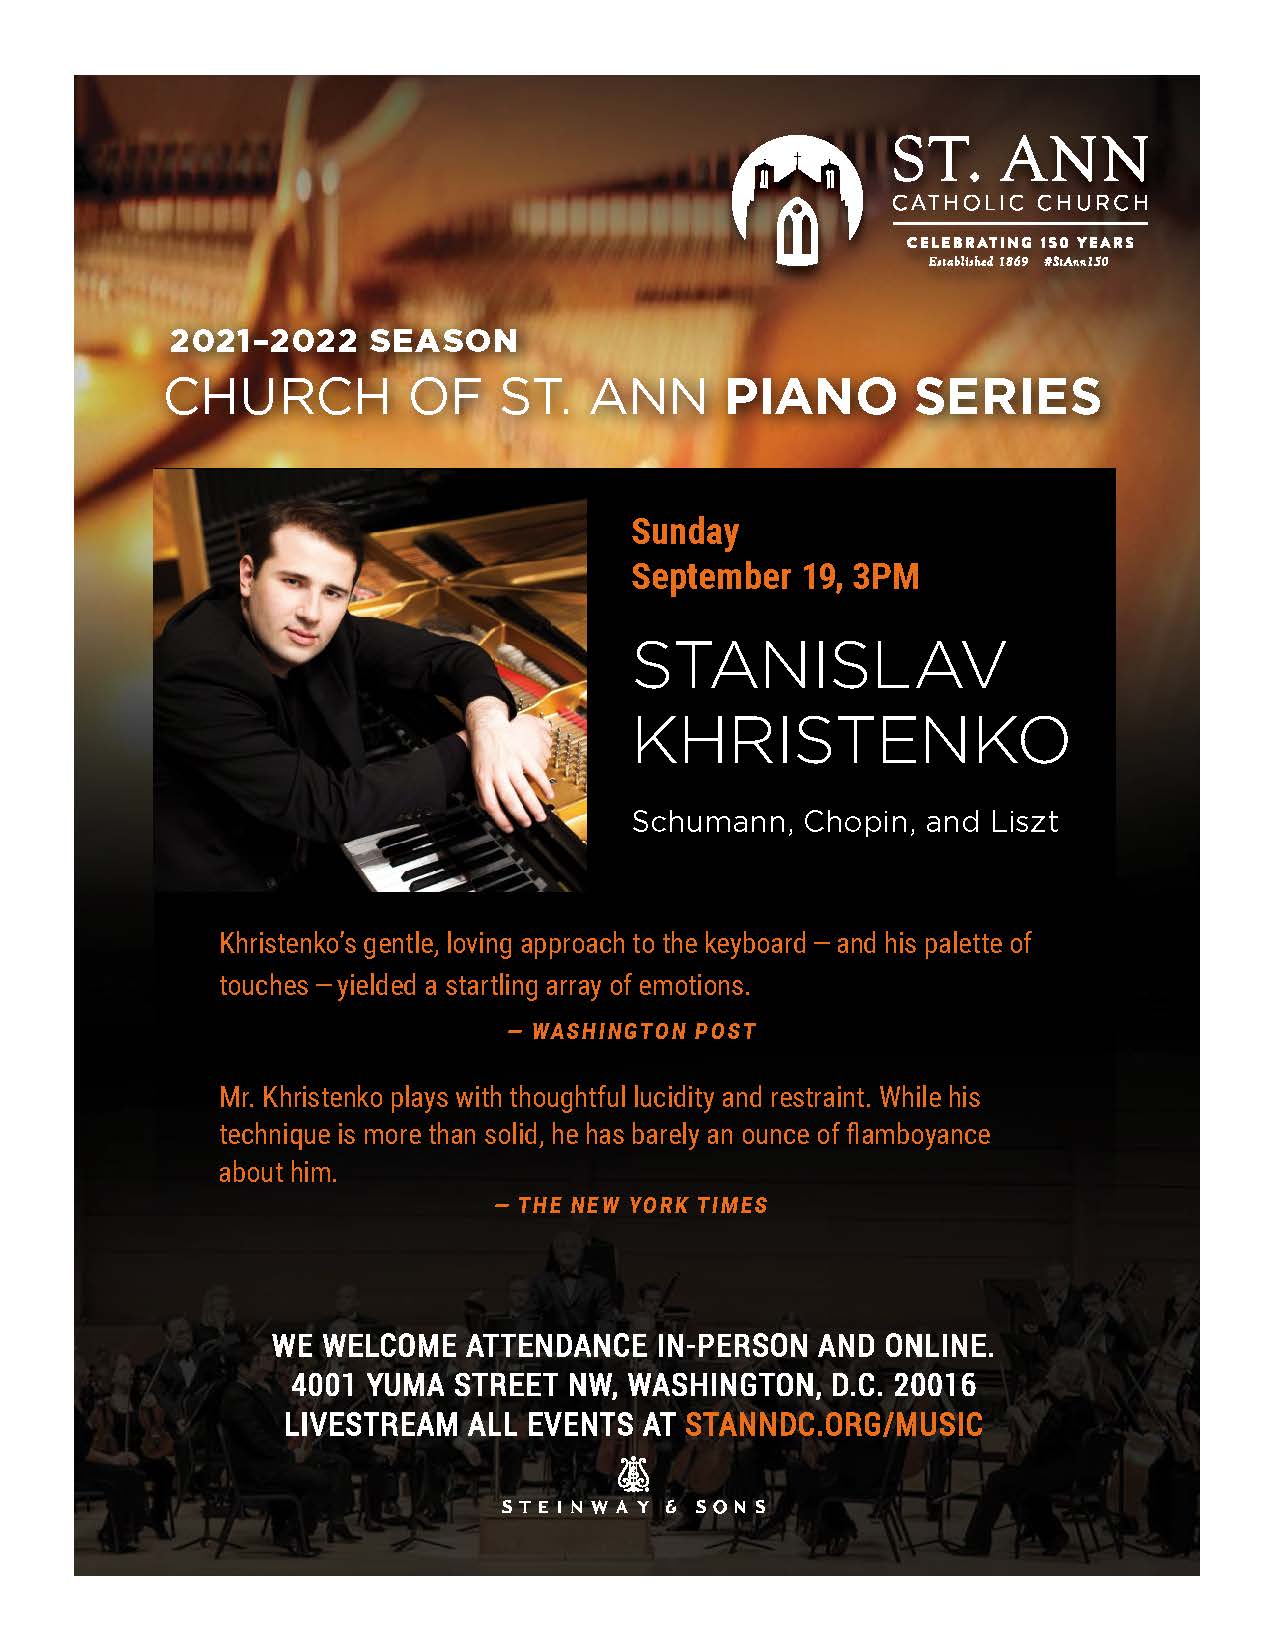 Piano Concert Live with Stanislav Khristenko, 